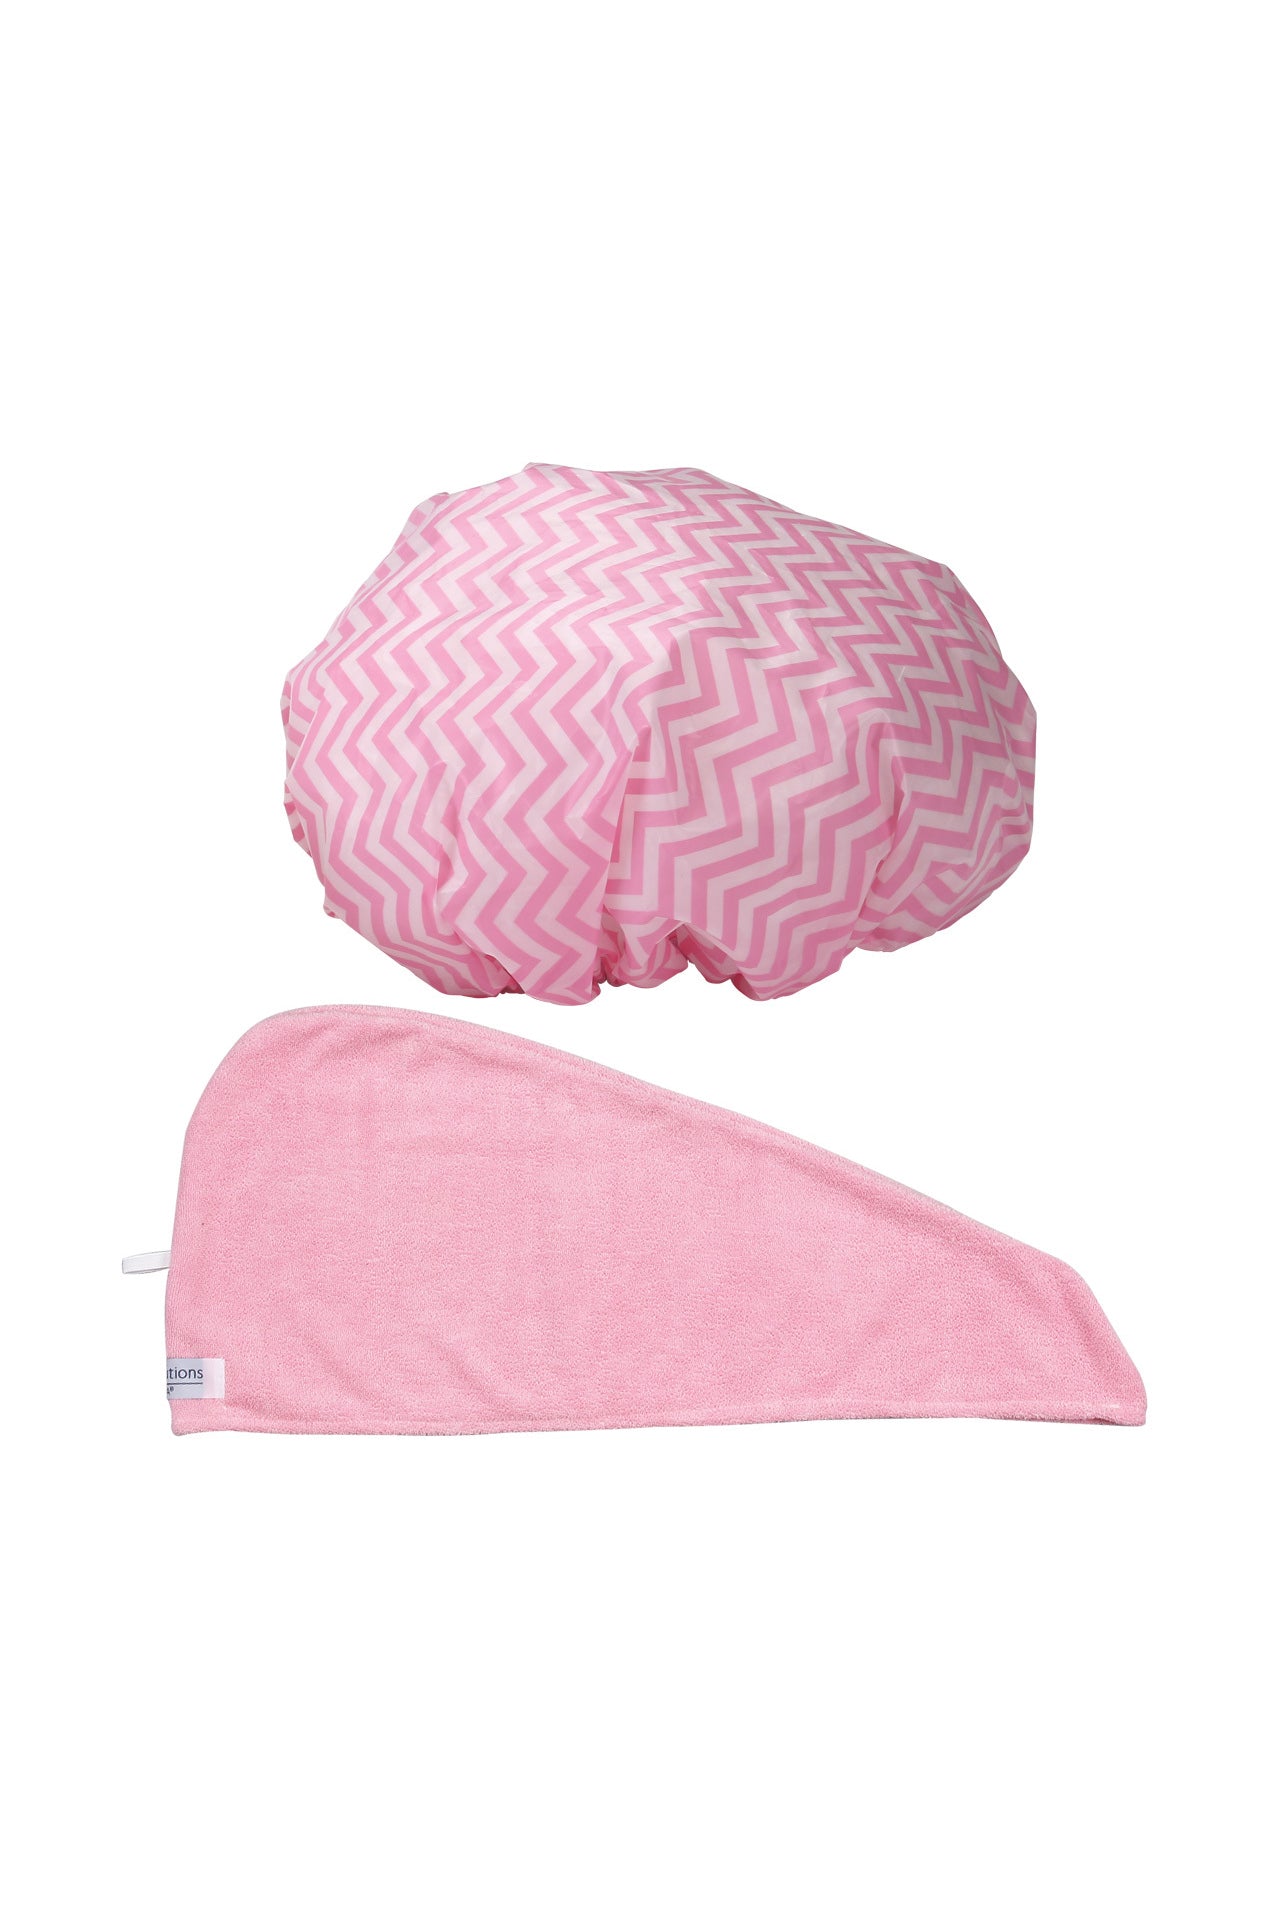 Hair Turban & Shower Cap (Pink)